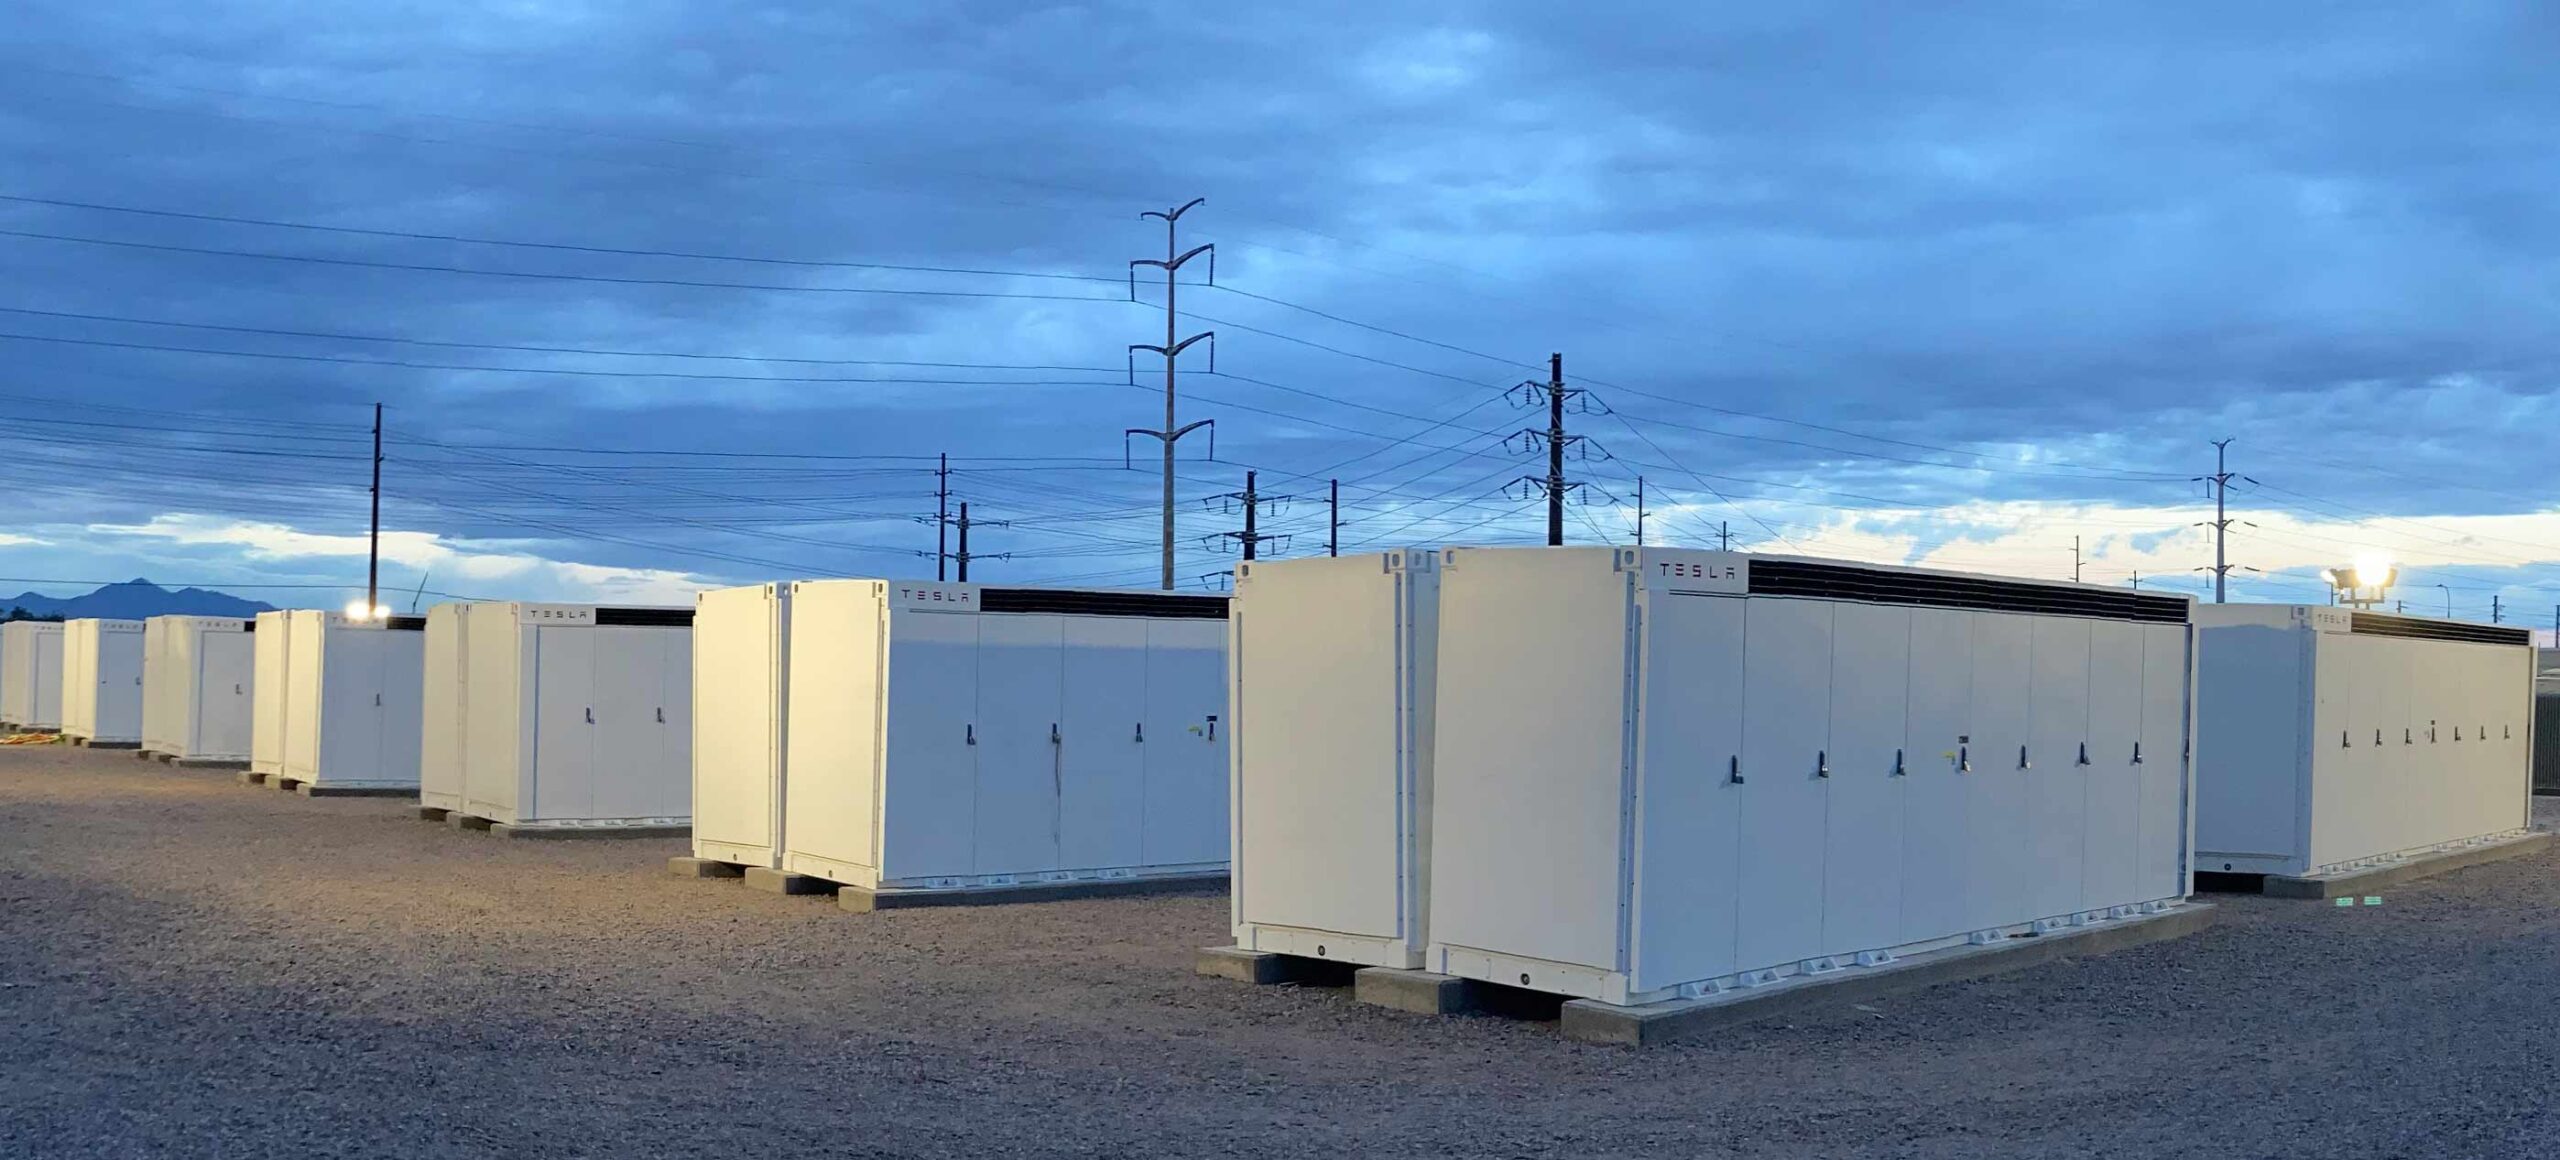 photo of banks of energy storage units with the Tesla logo